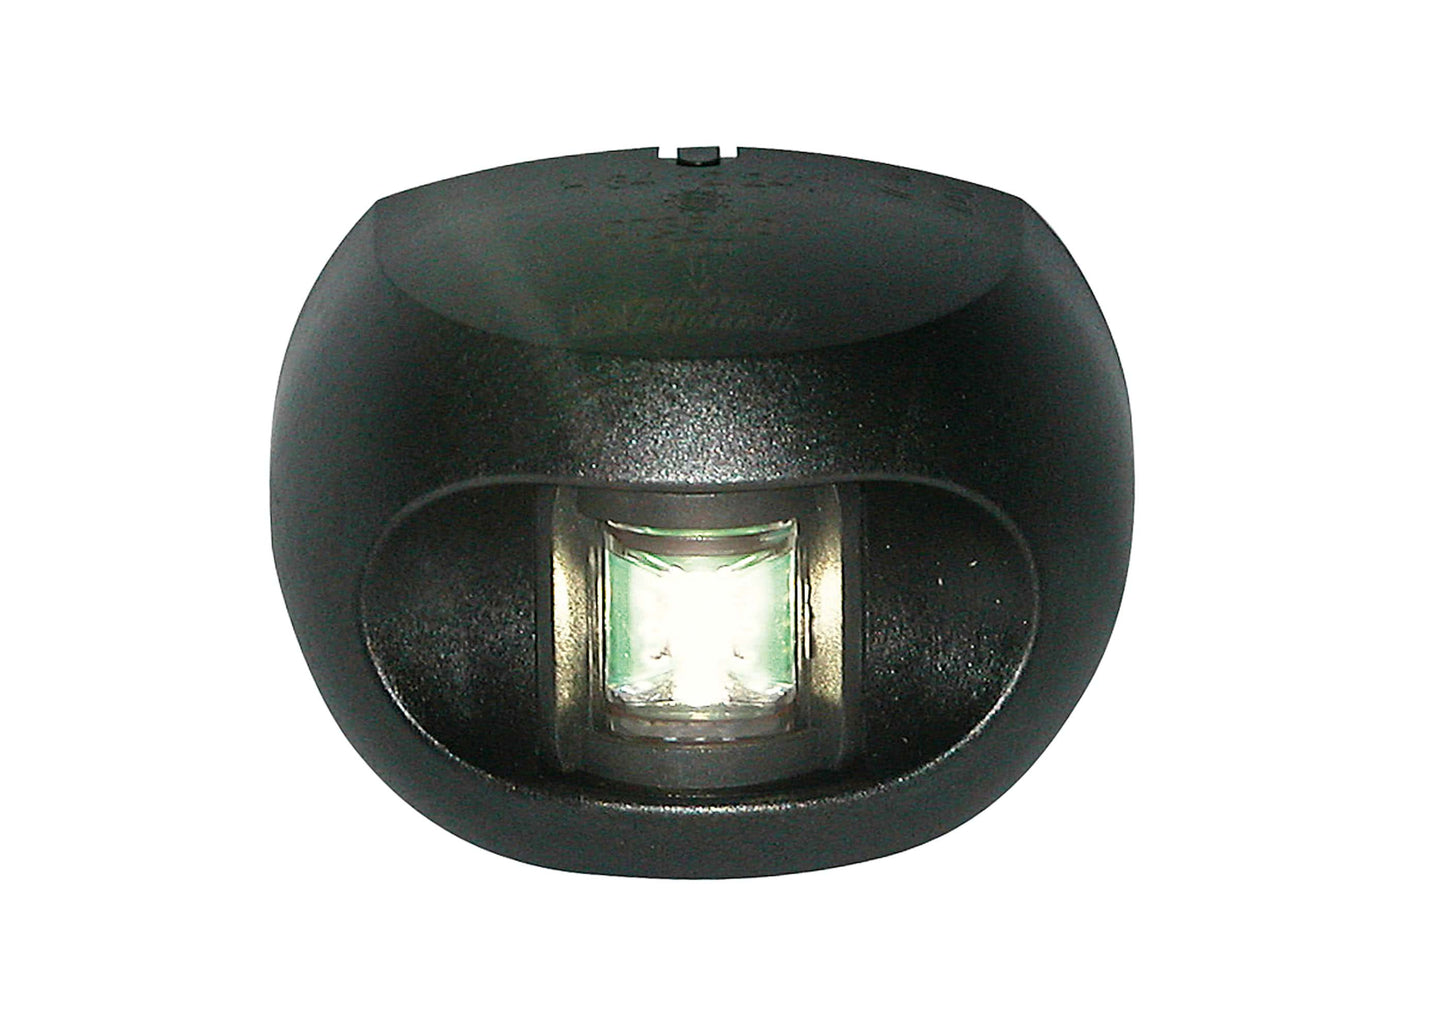 Series 34 LED stern navigation light